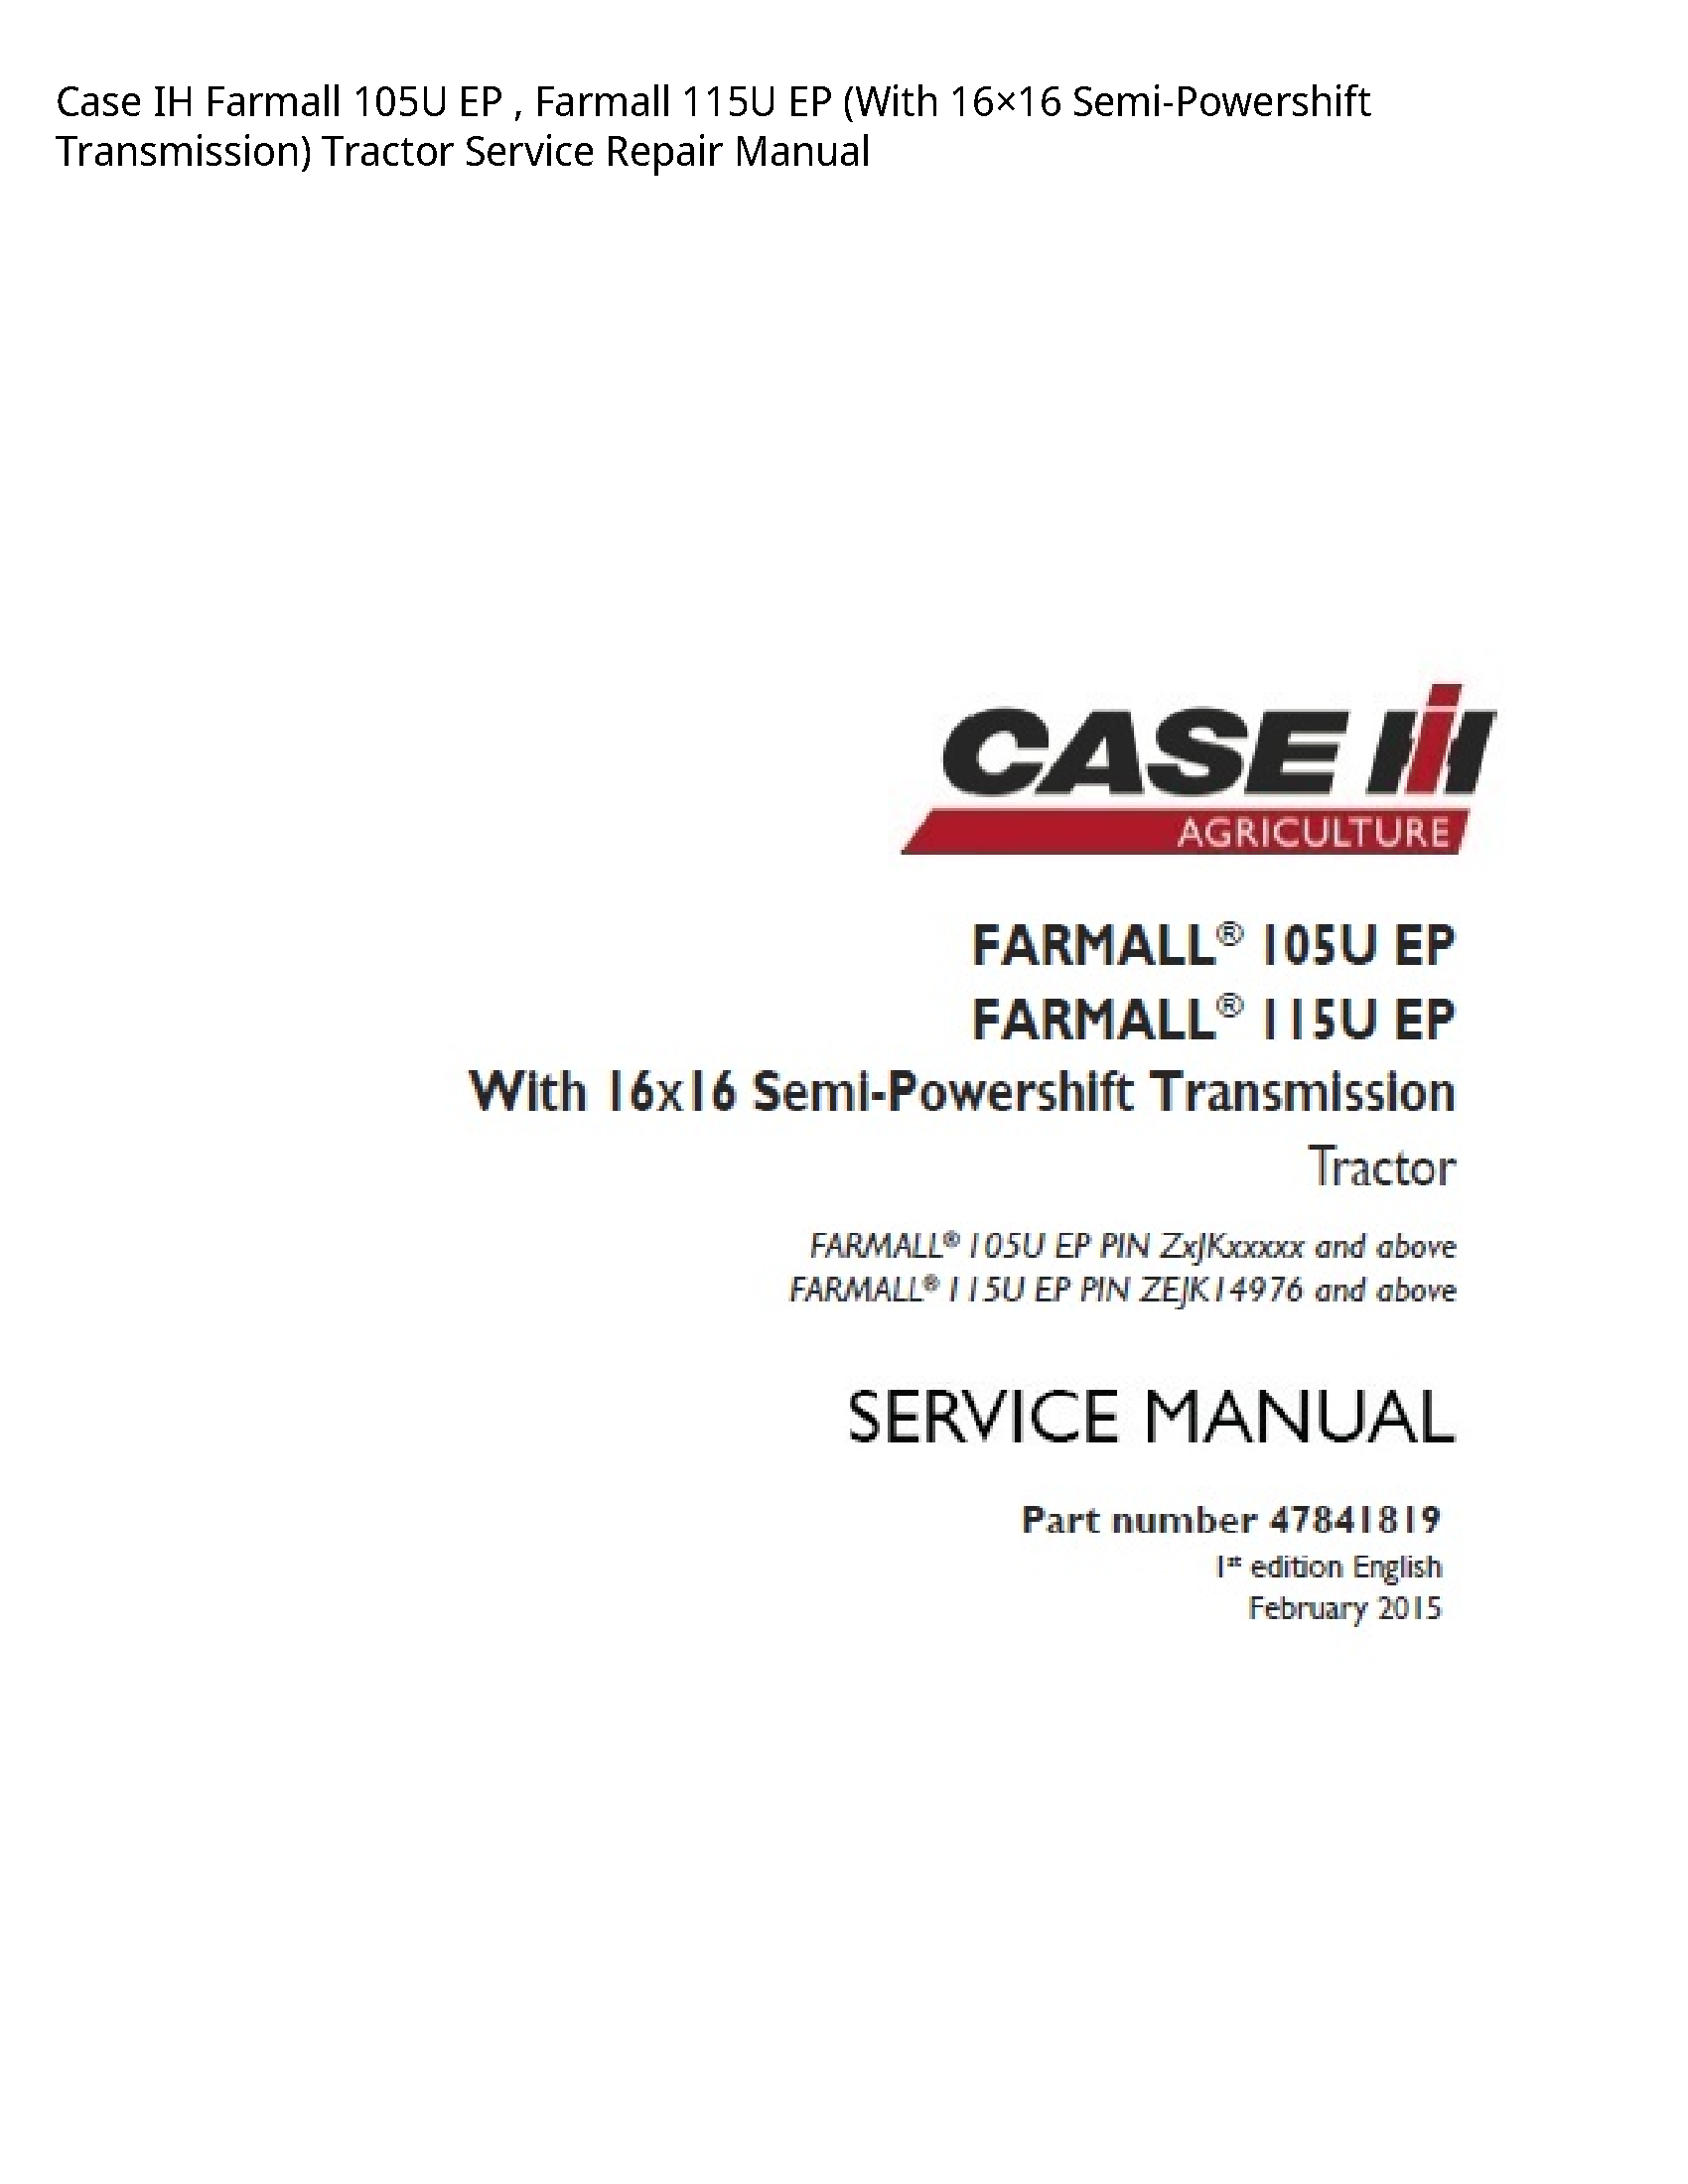 Case/Case IH 105U IH Farmall EP Farmall EP (With Semi-Powershift Transmission) Tractor manual